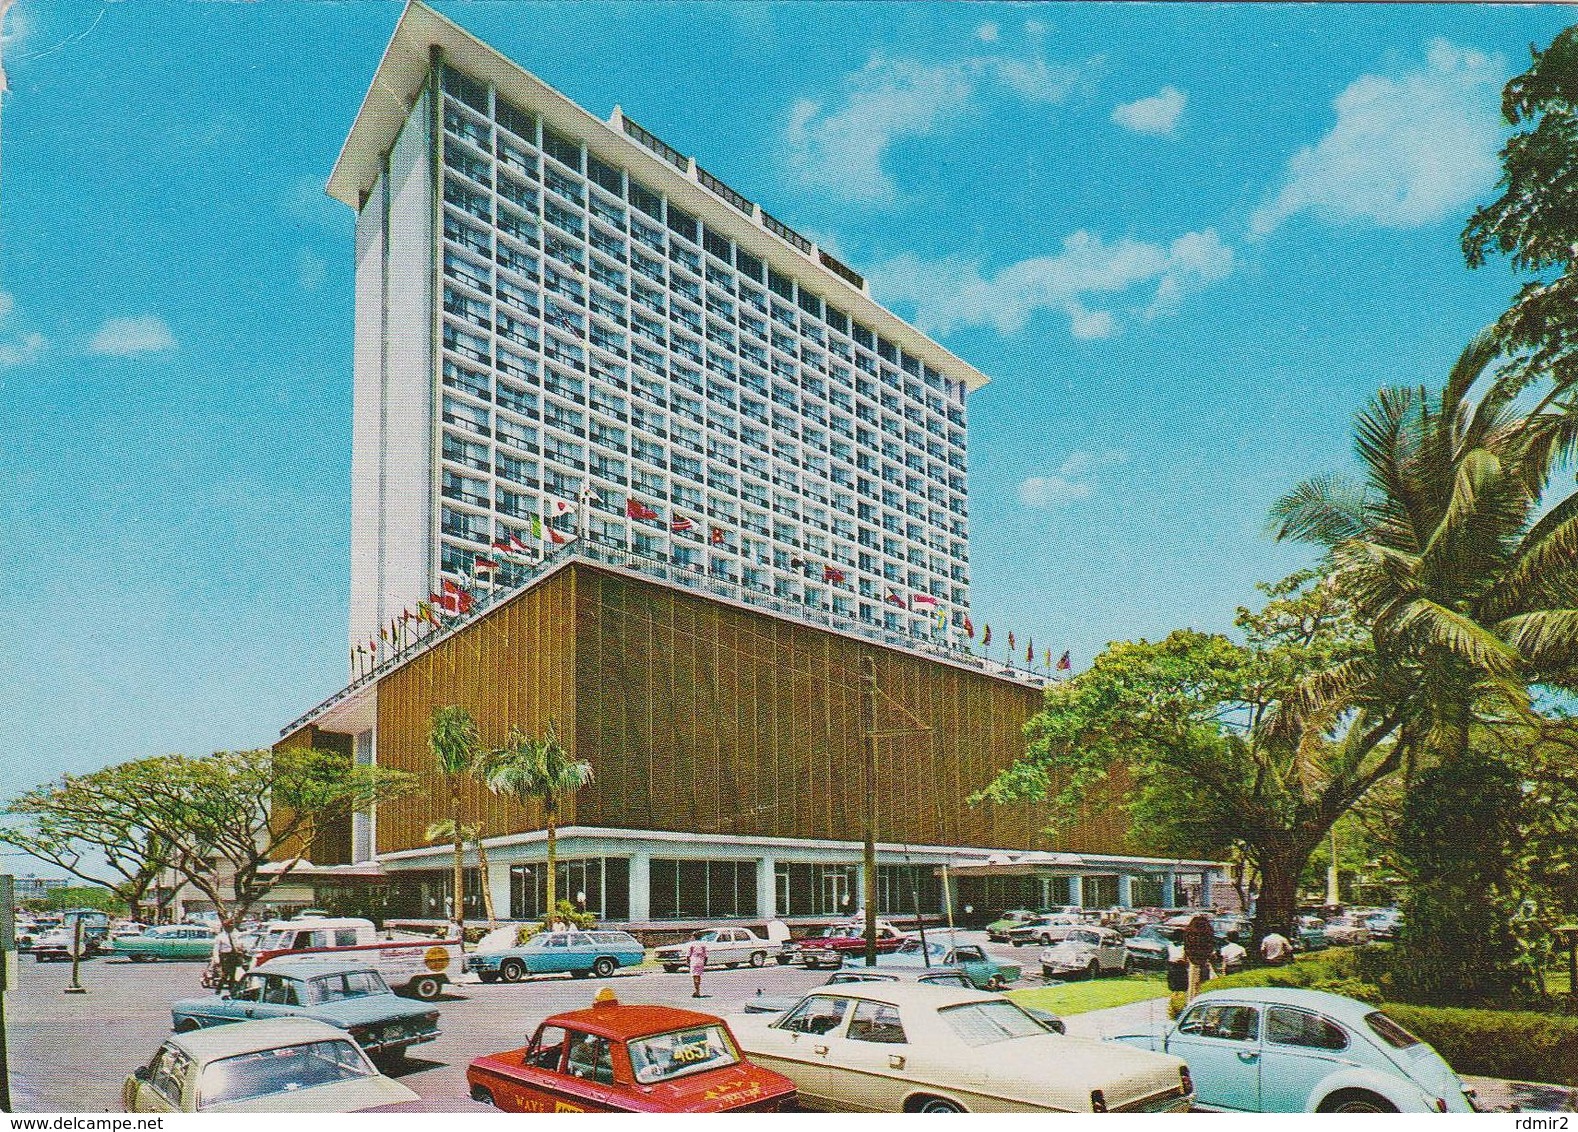 [51] MANILA, Hilton. Hotels / Hoteles. Sent To / Enviada A Barcelona, Spain (1973). - Filipinas